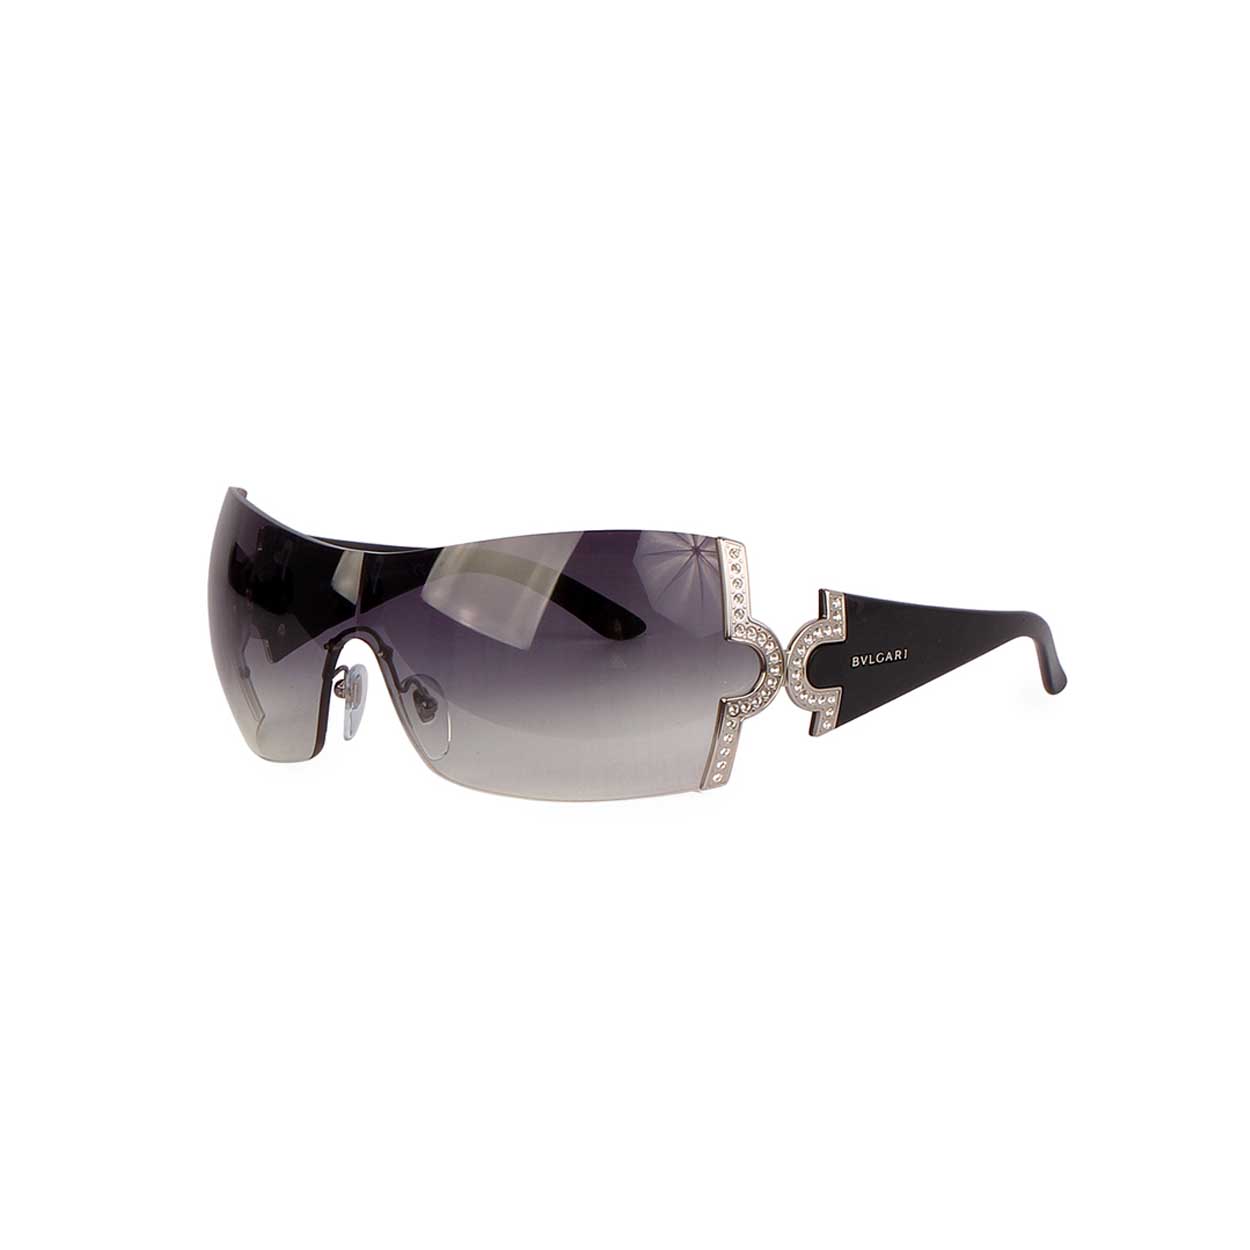 BVLGARI Crystal Sunglasses 651 Black - New | Luxity